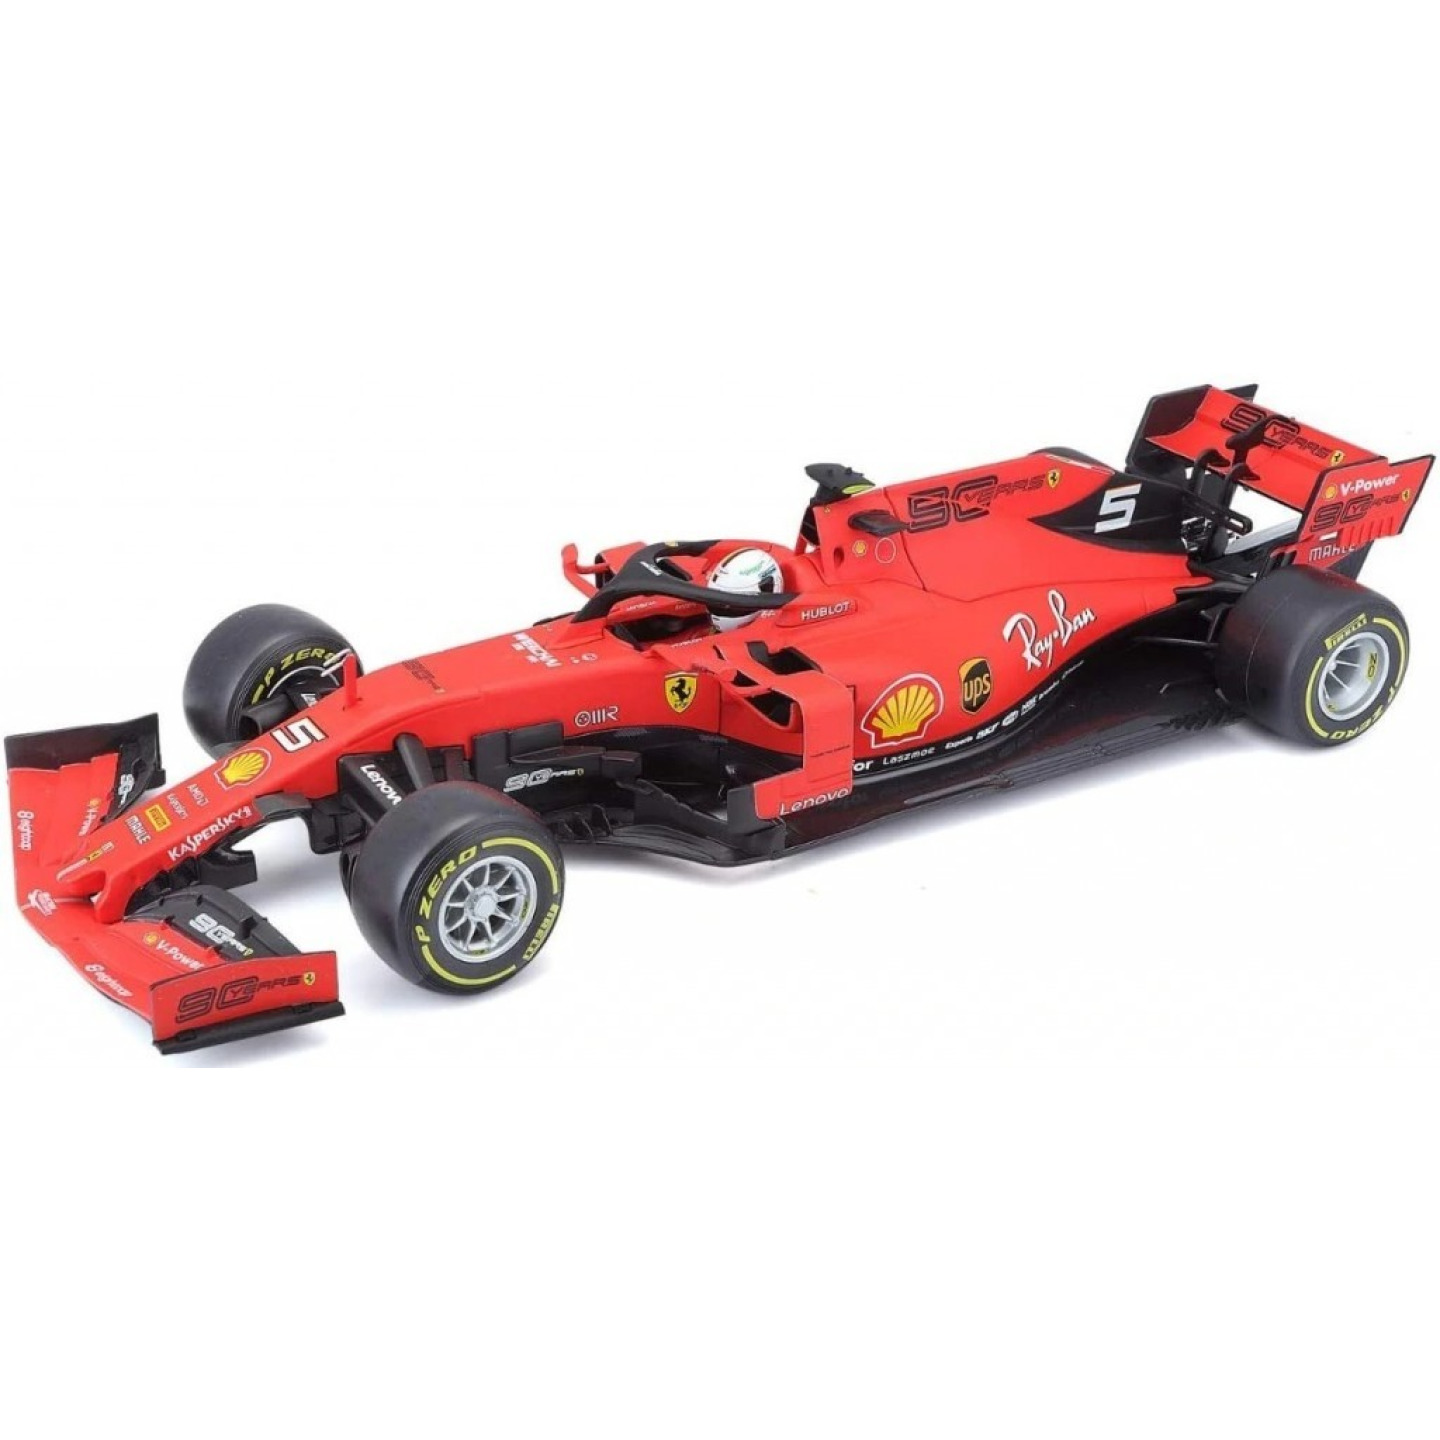 Burago Kovový model auta Ferrari F1 2019 1:18, červená